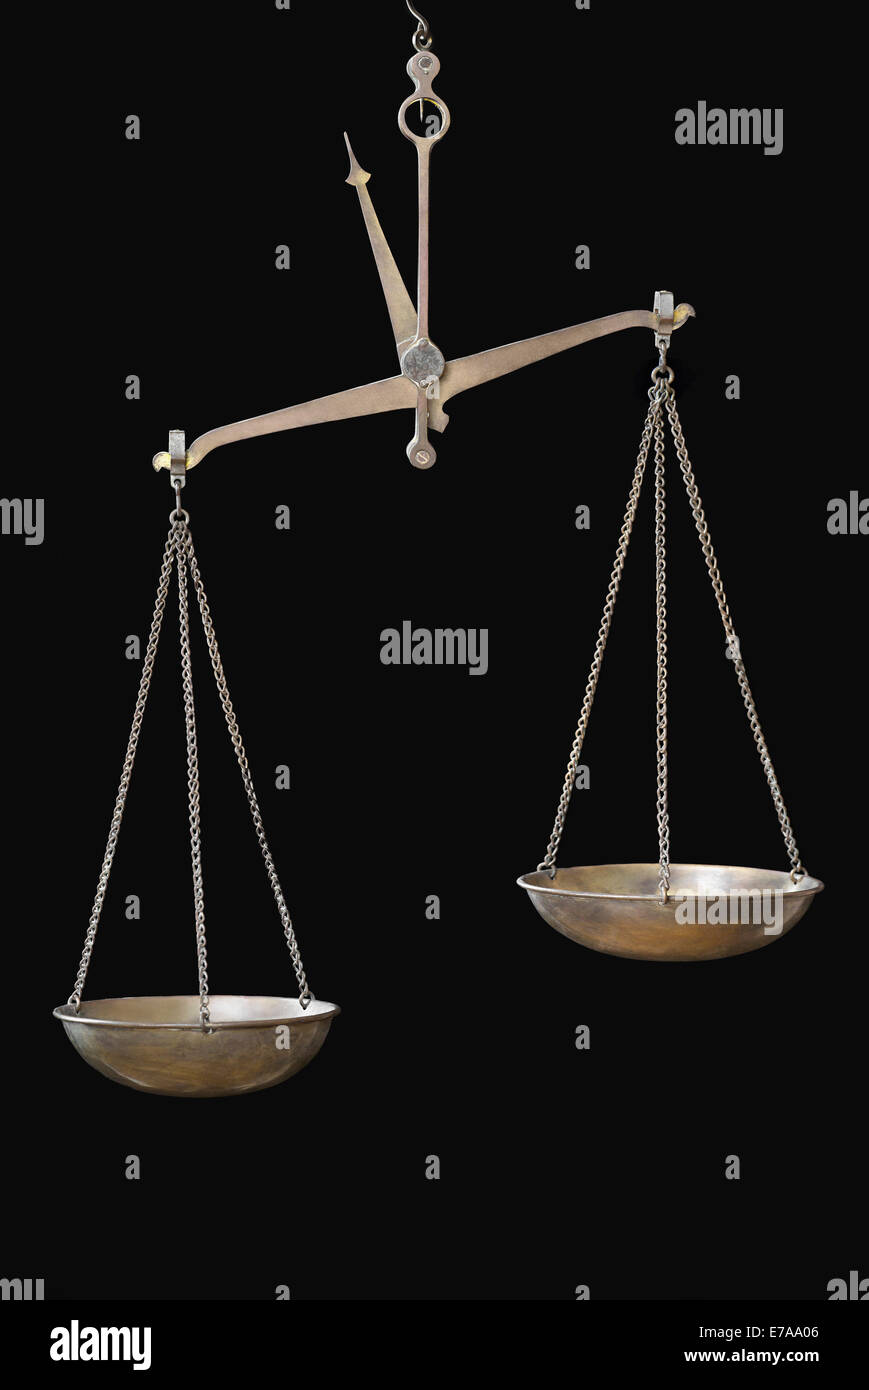 Equal-arm balance hanging against black background Stock Photo